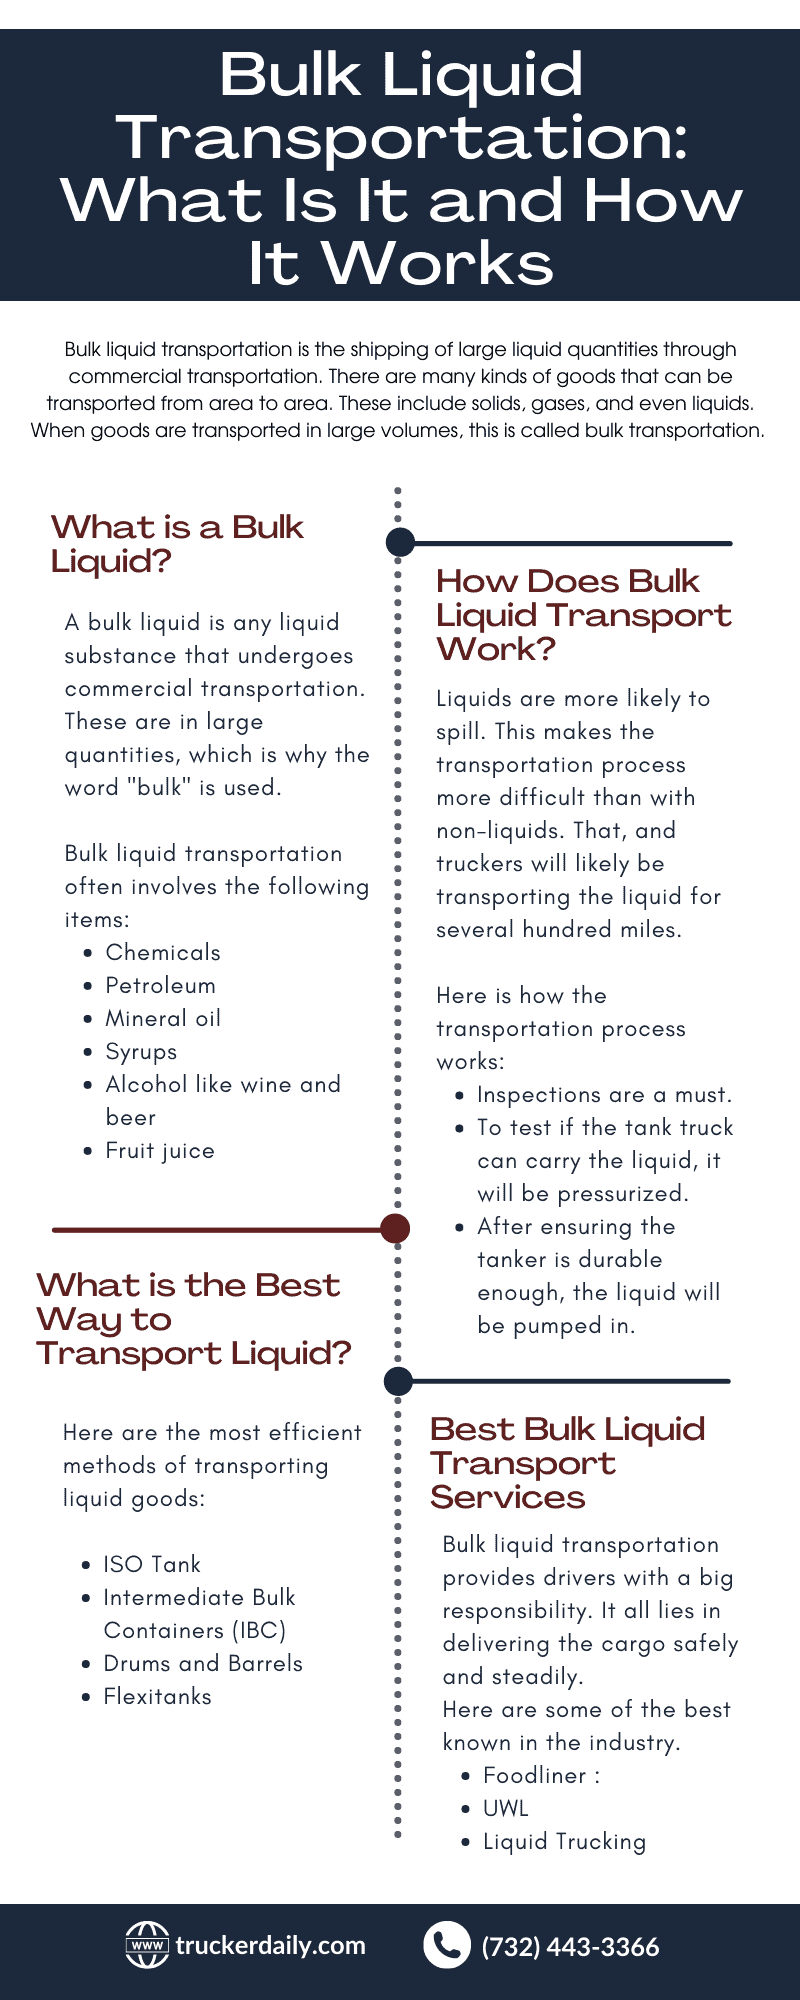 How Does Bulk Liquid Transport Work?